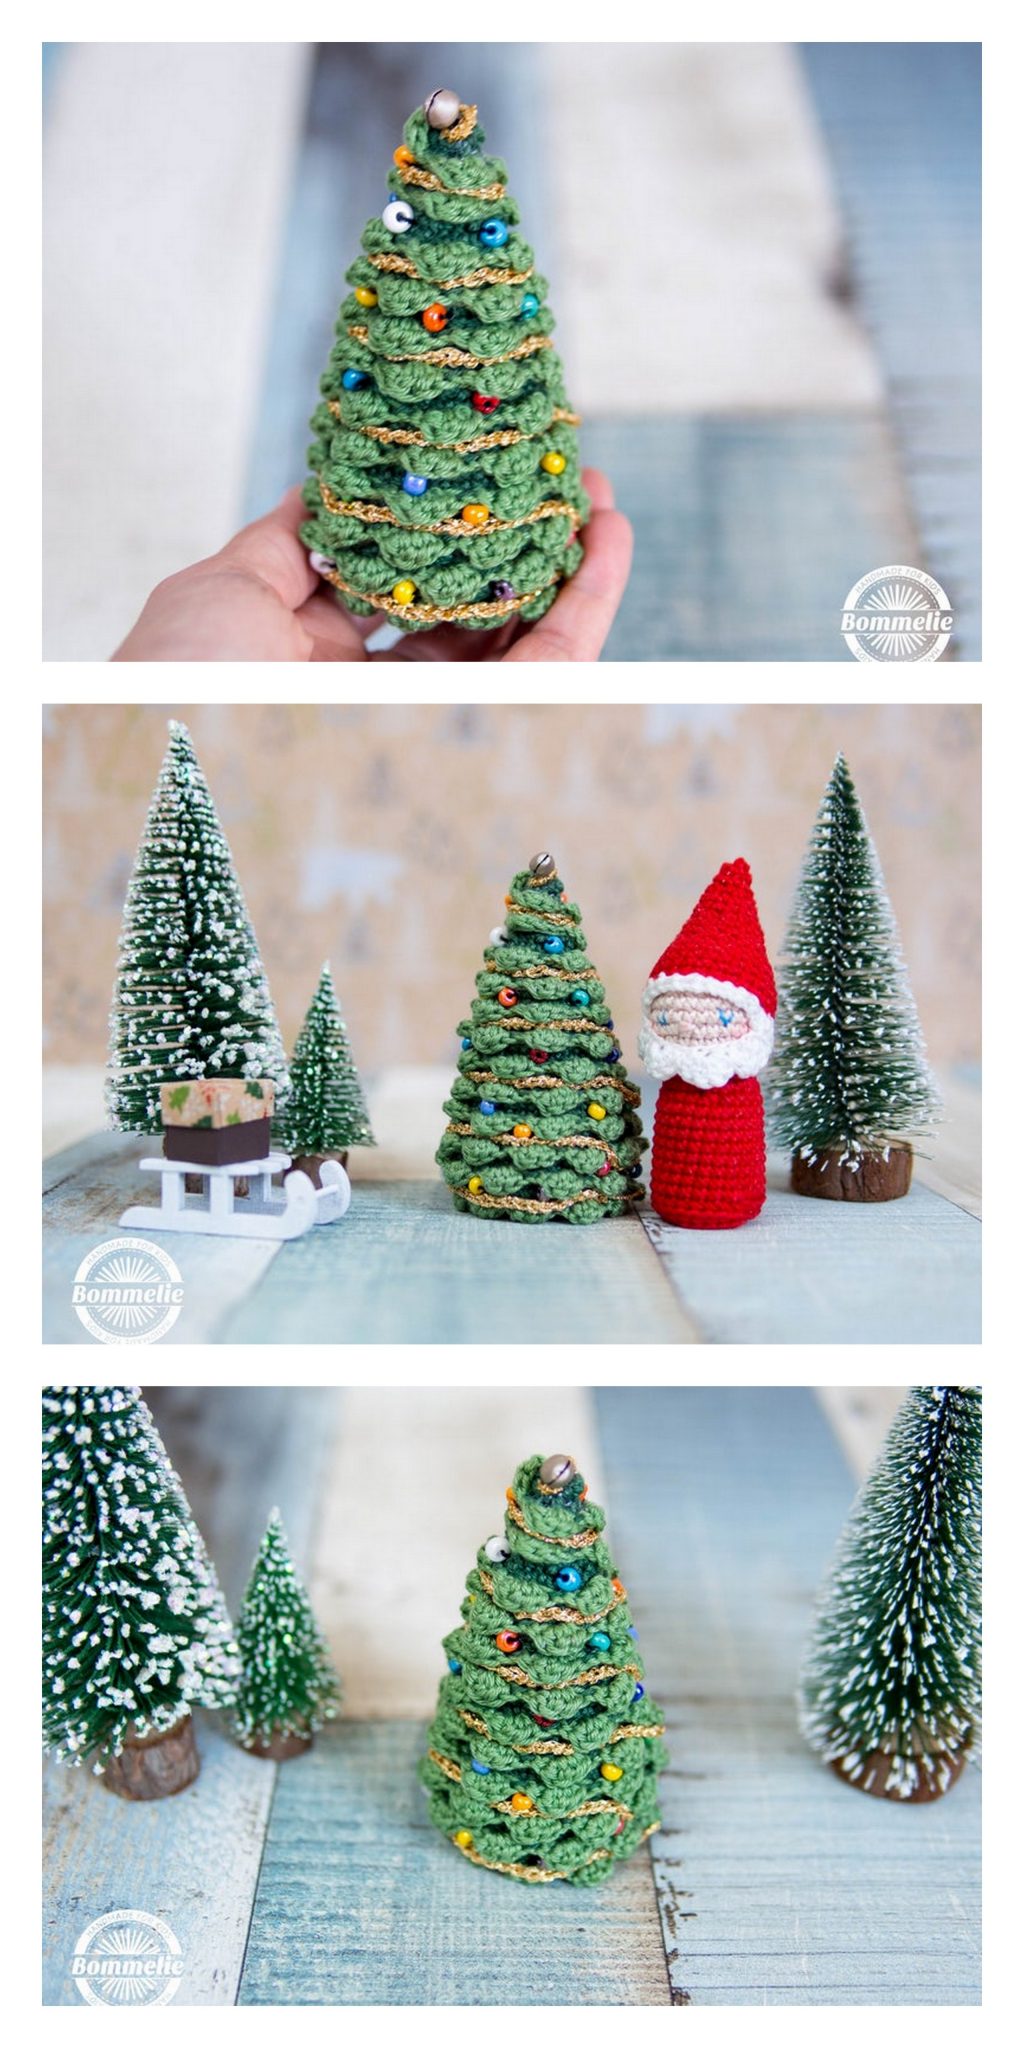 Amigurumi Christmas Tree Free Pattern - FREE AMİGURUMİ CROCHET